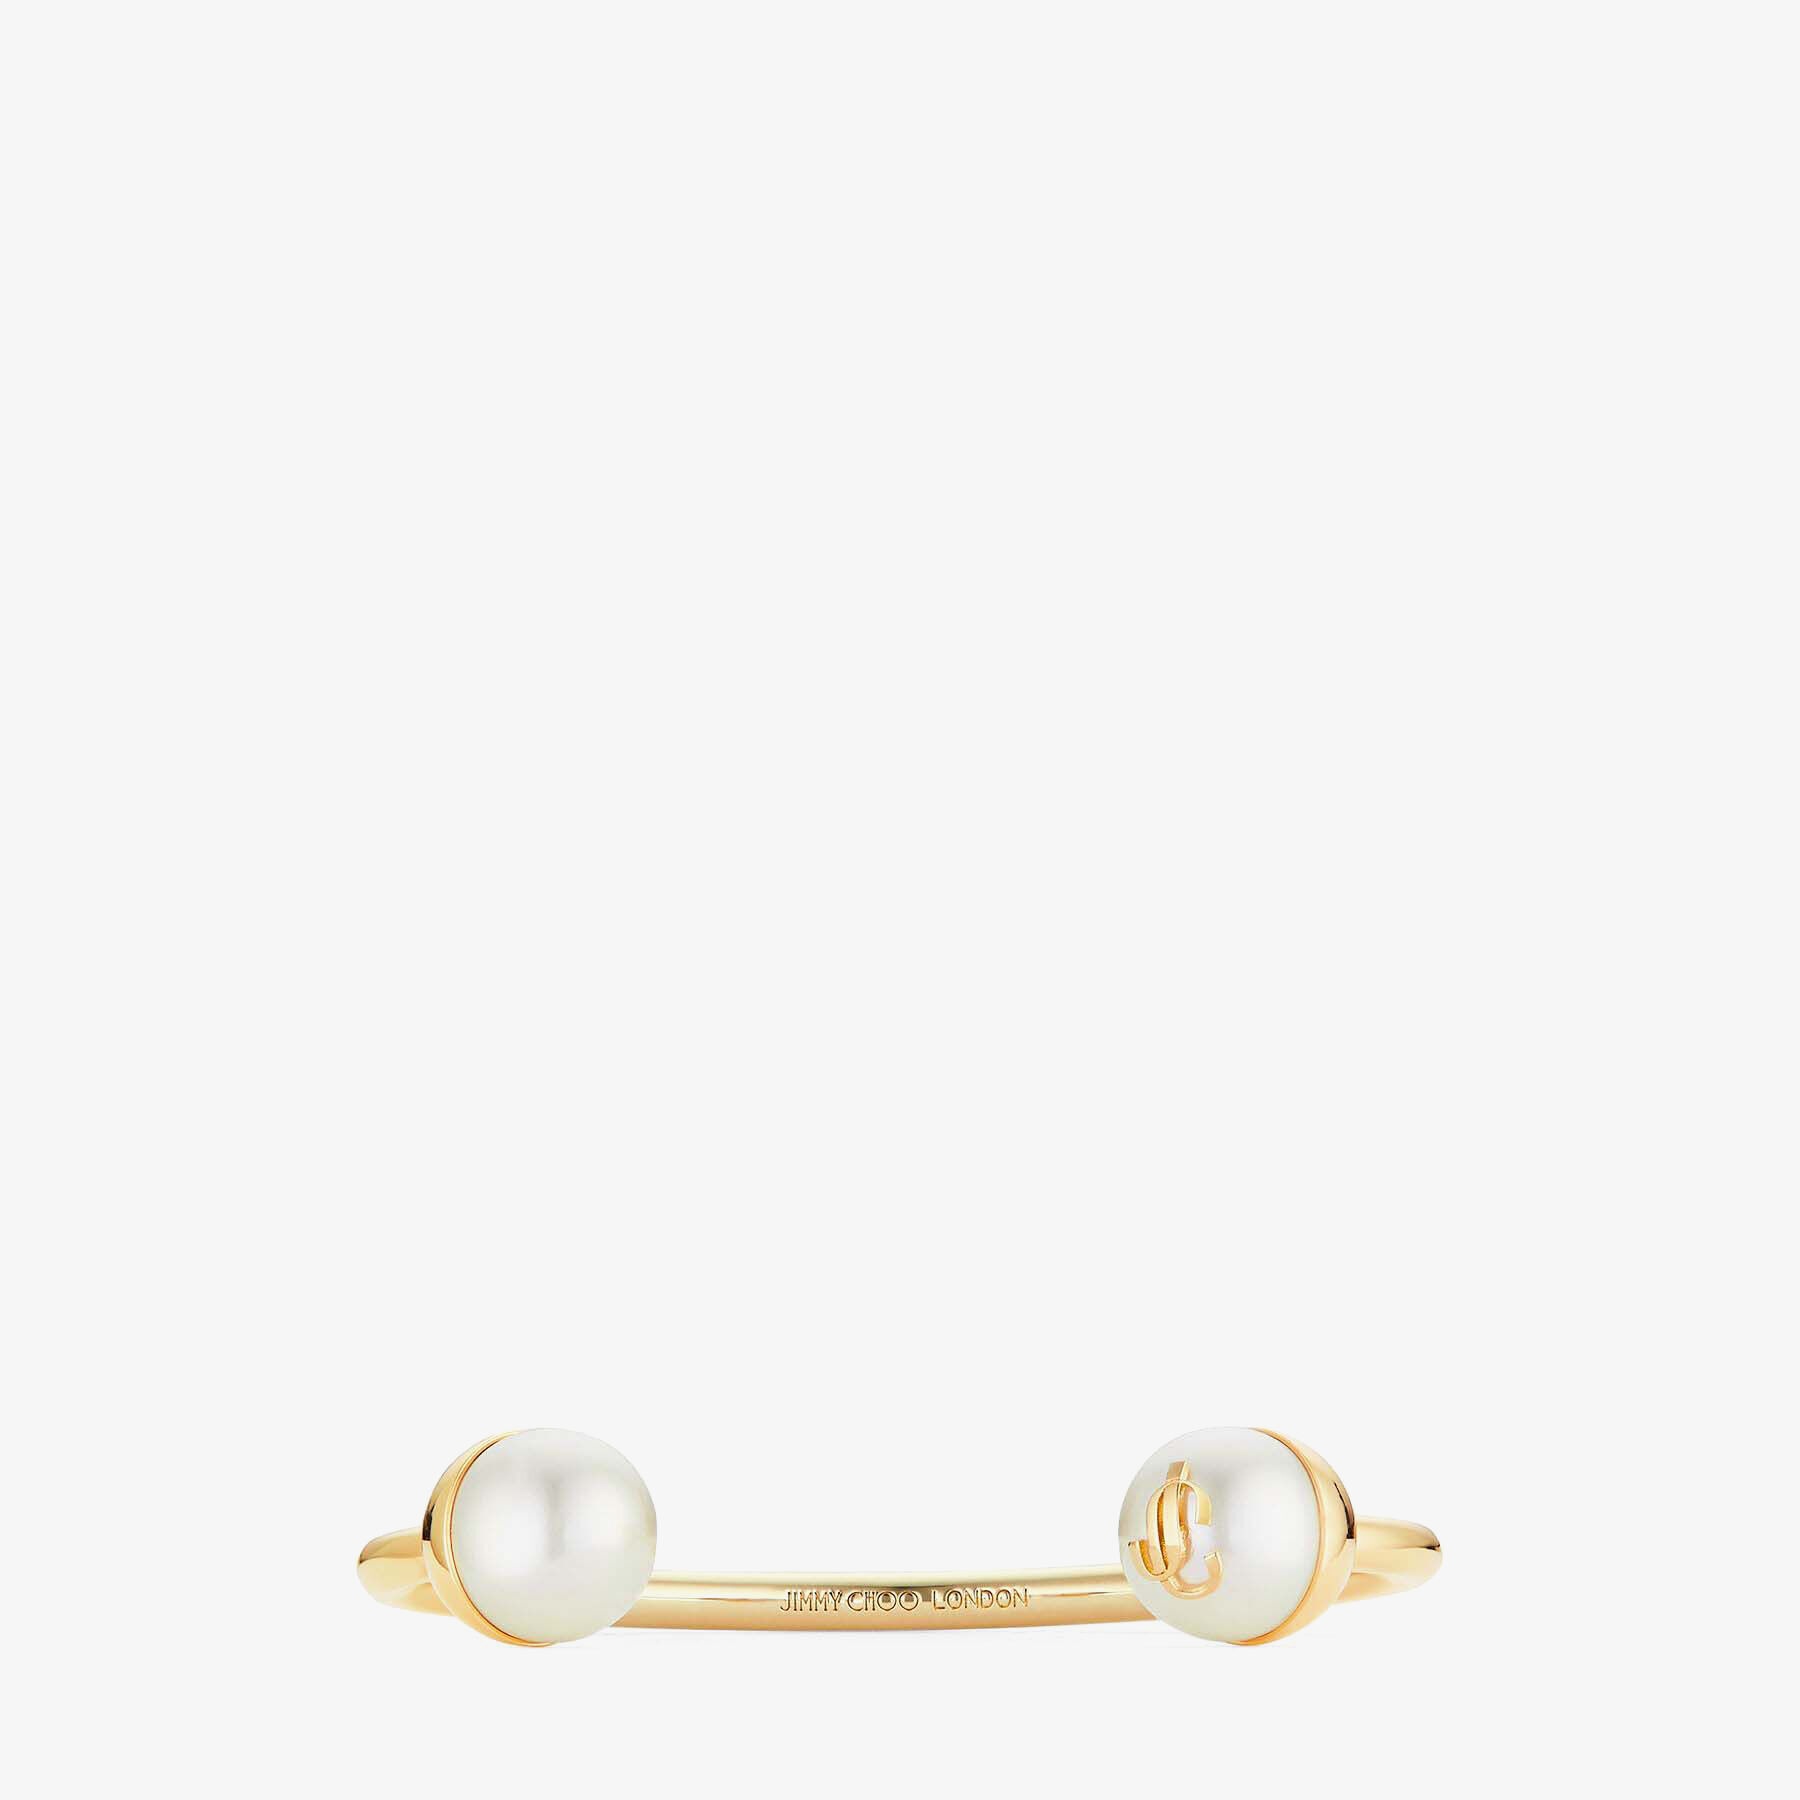 JC Pearl Cuff
Gold-Finish Metal Cuff Bracelet with Pearls - 4